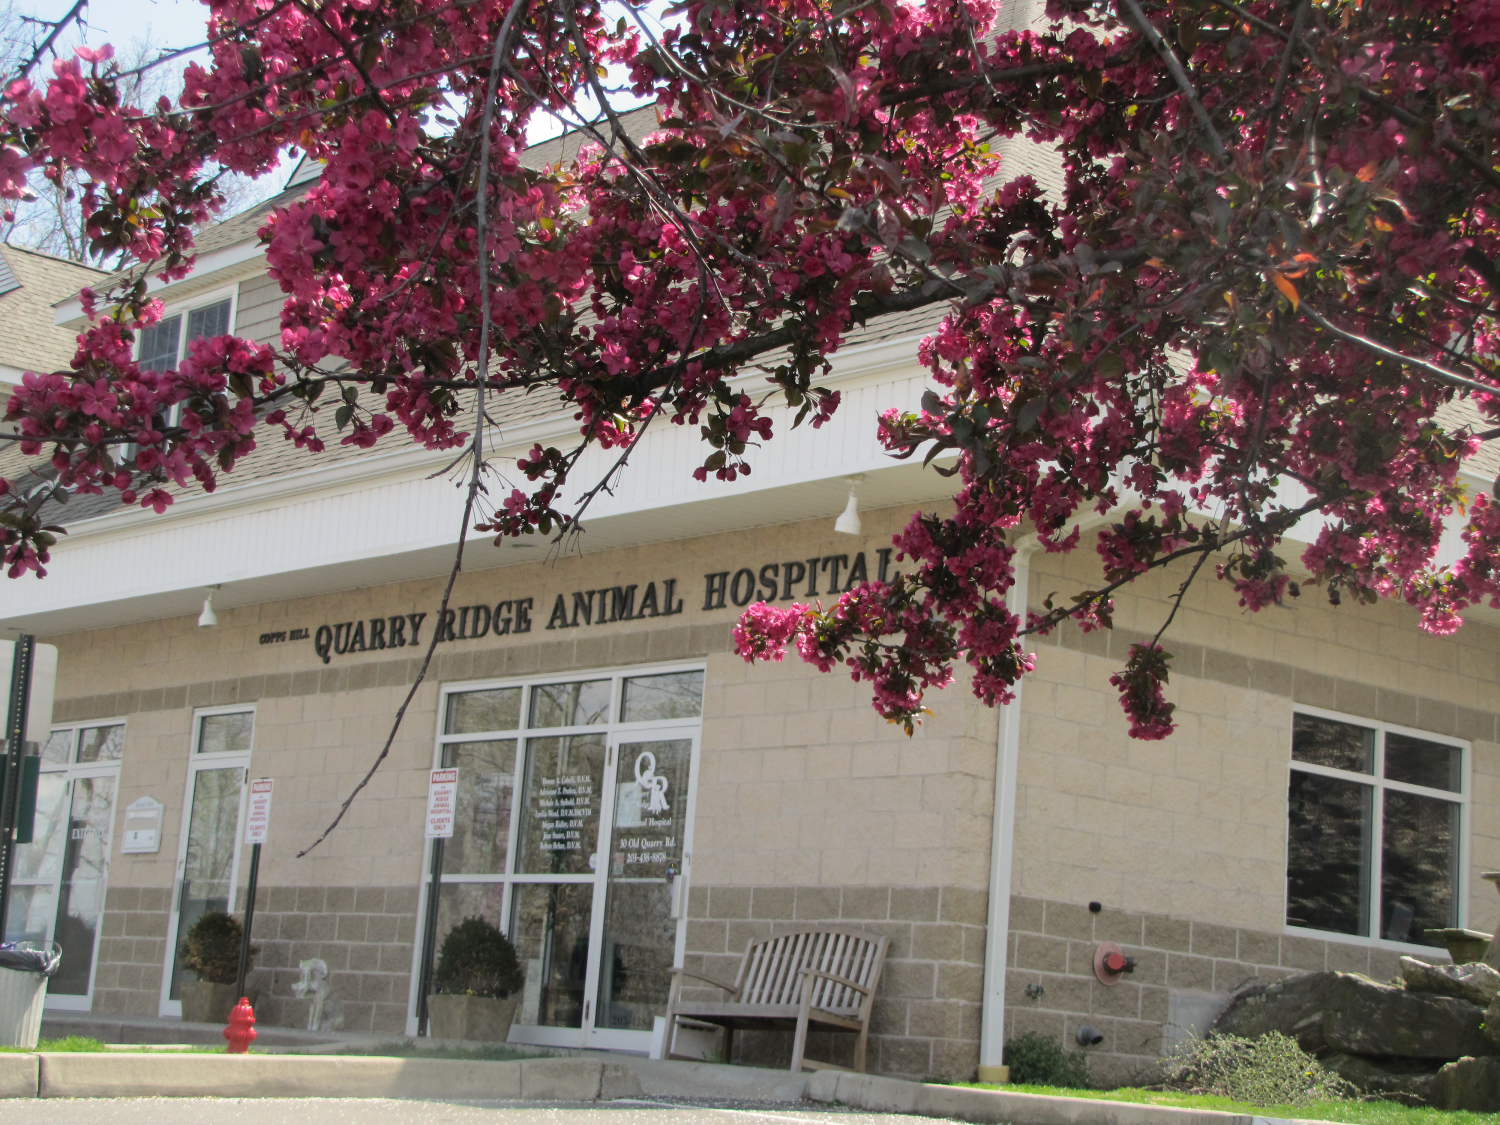 Quarry Ridge Animal Hospital, serving Ridgefield, CT since 1992